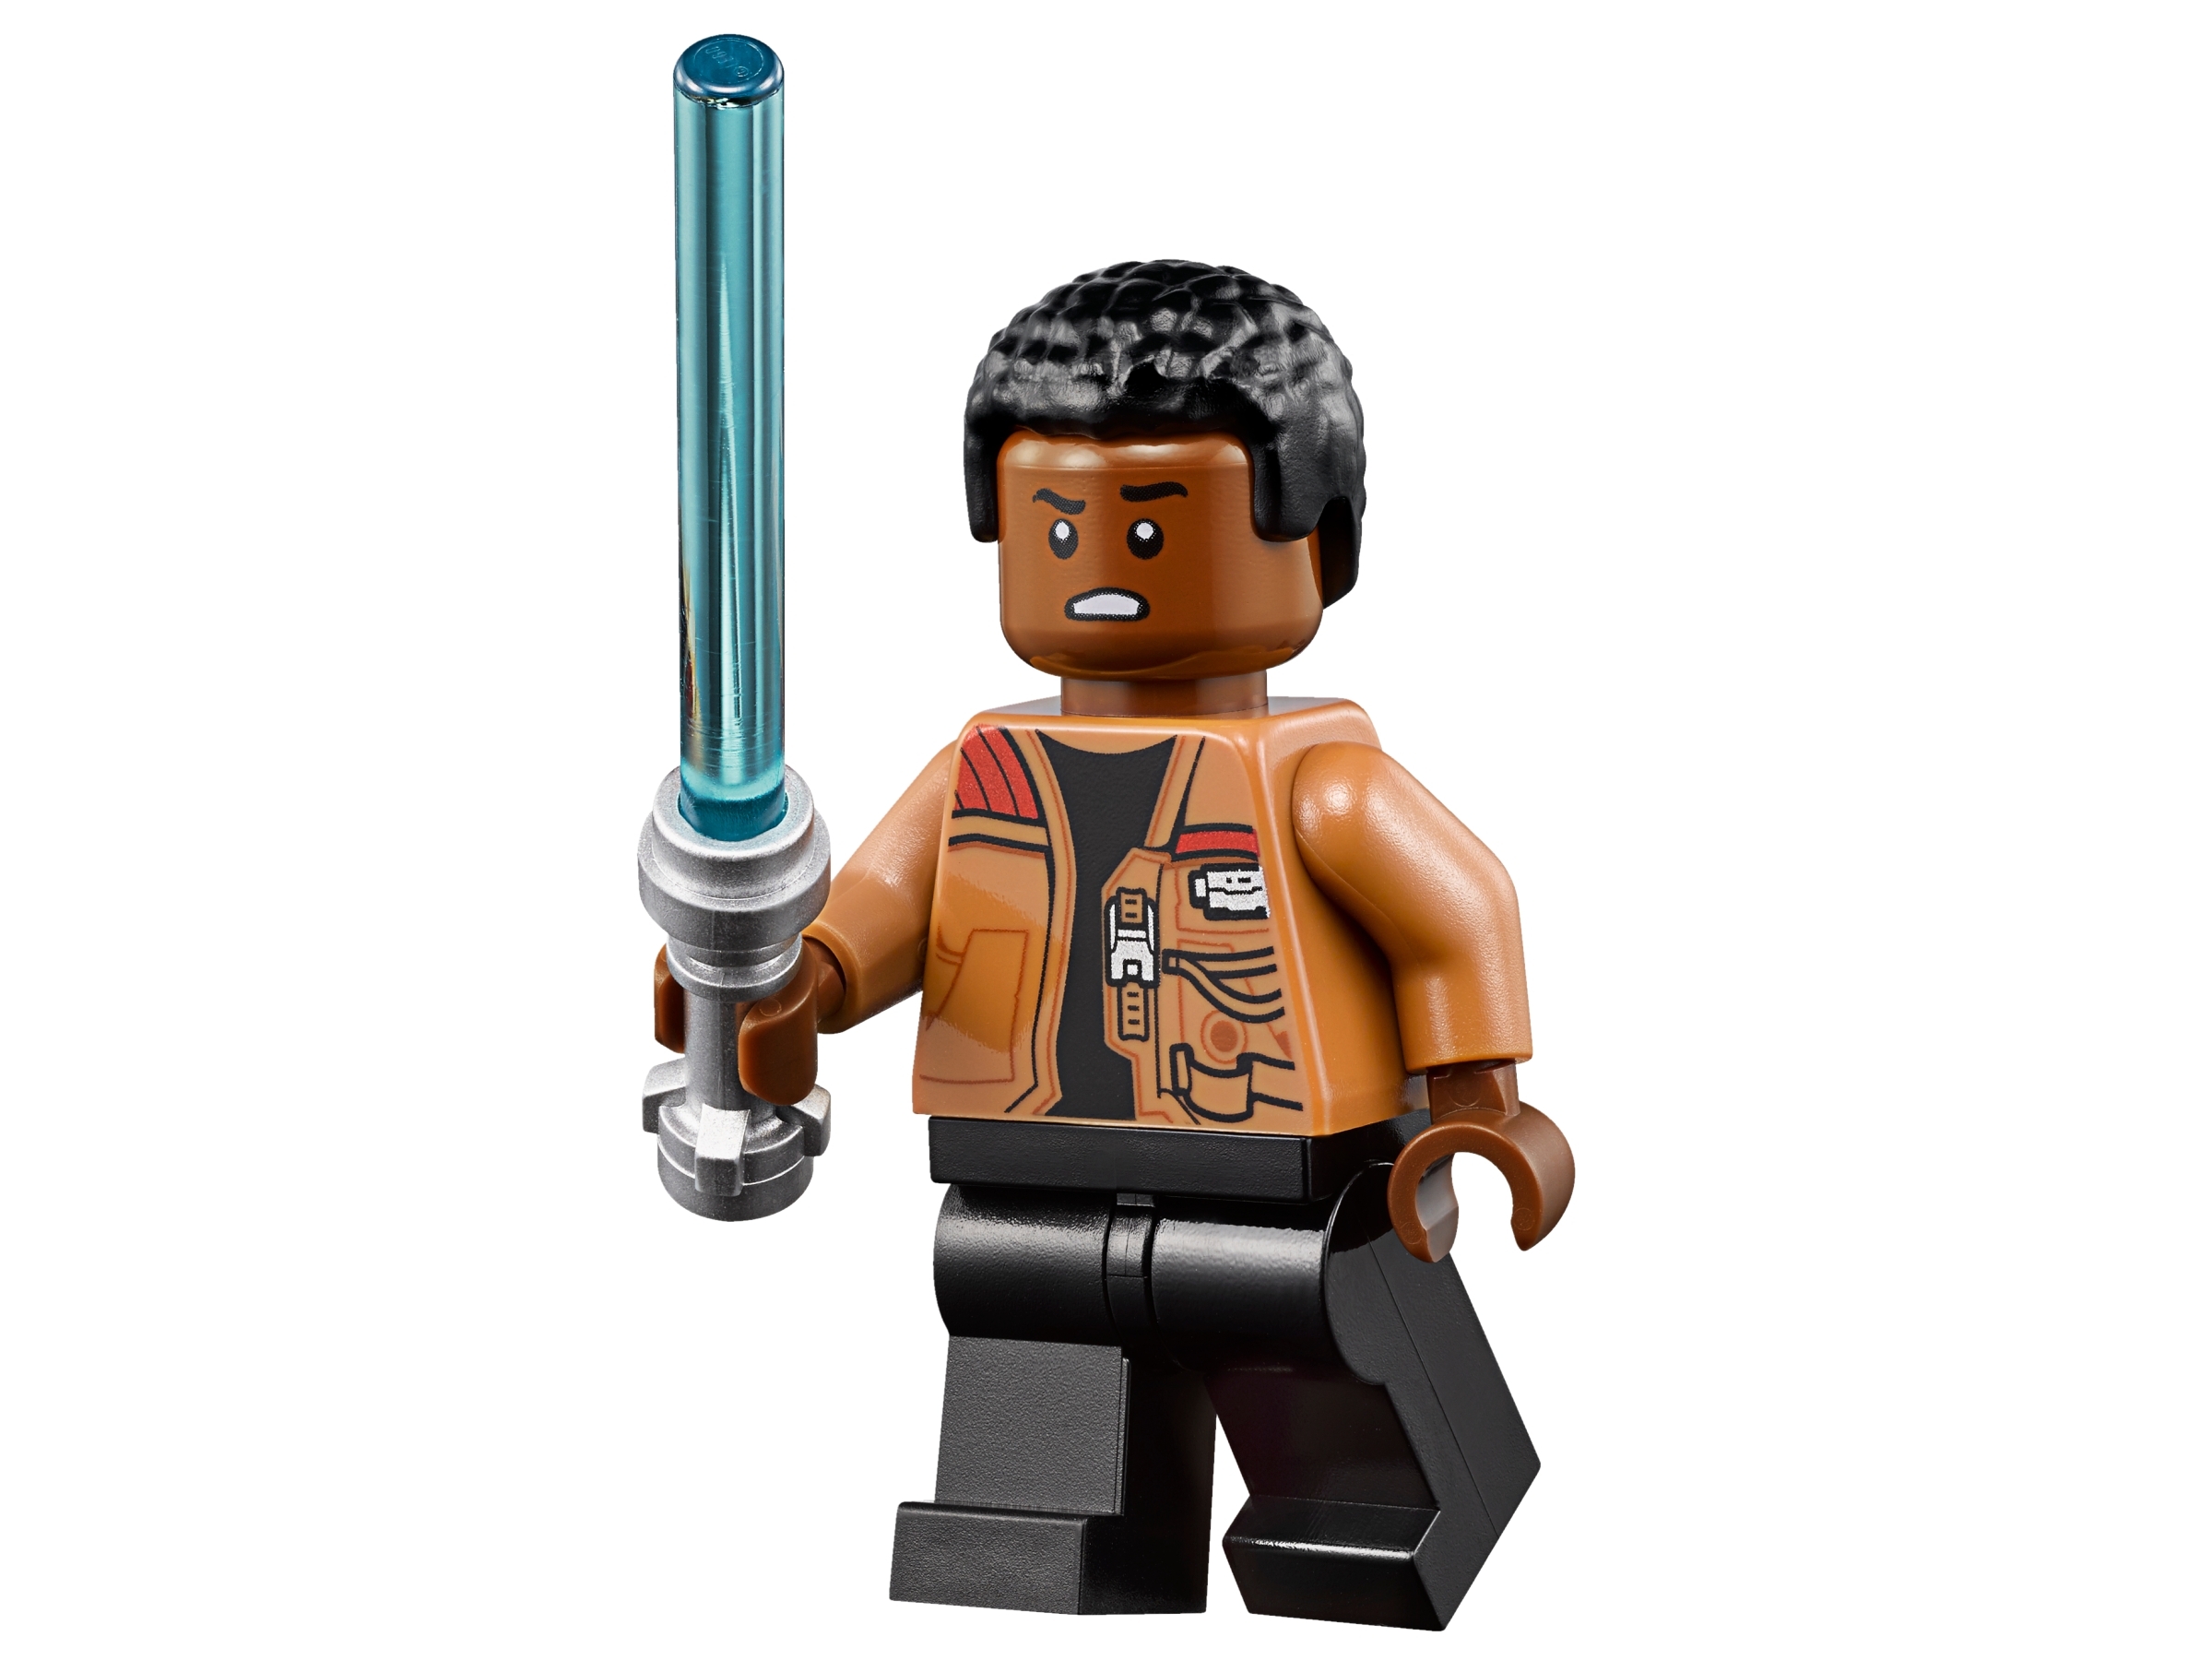 Lego New Star Wars Minifigure Minifig Maz Kanata 75139 